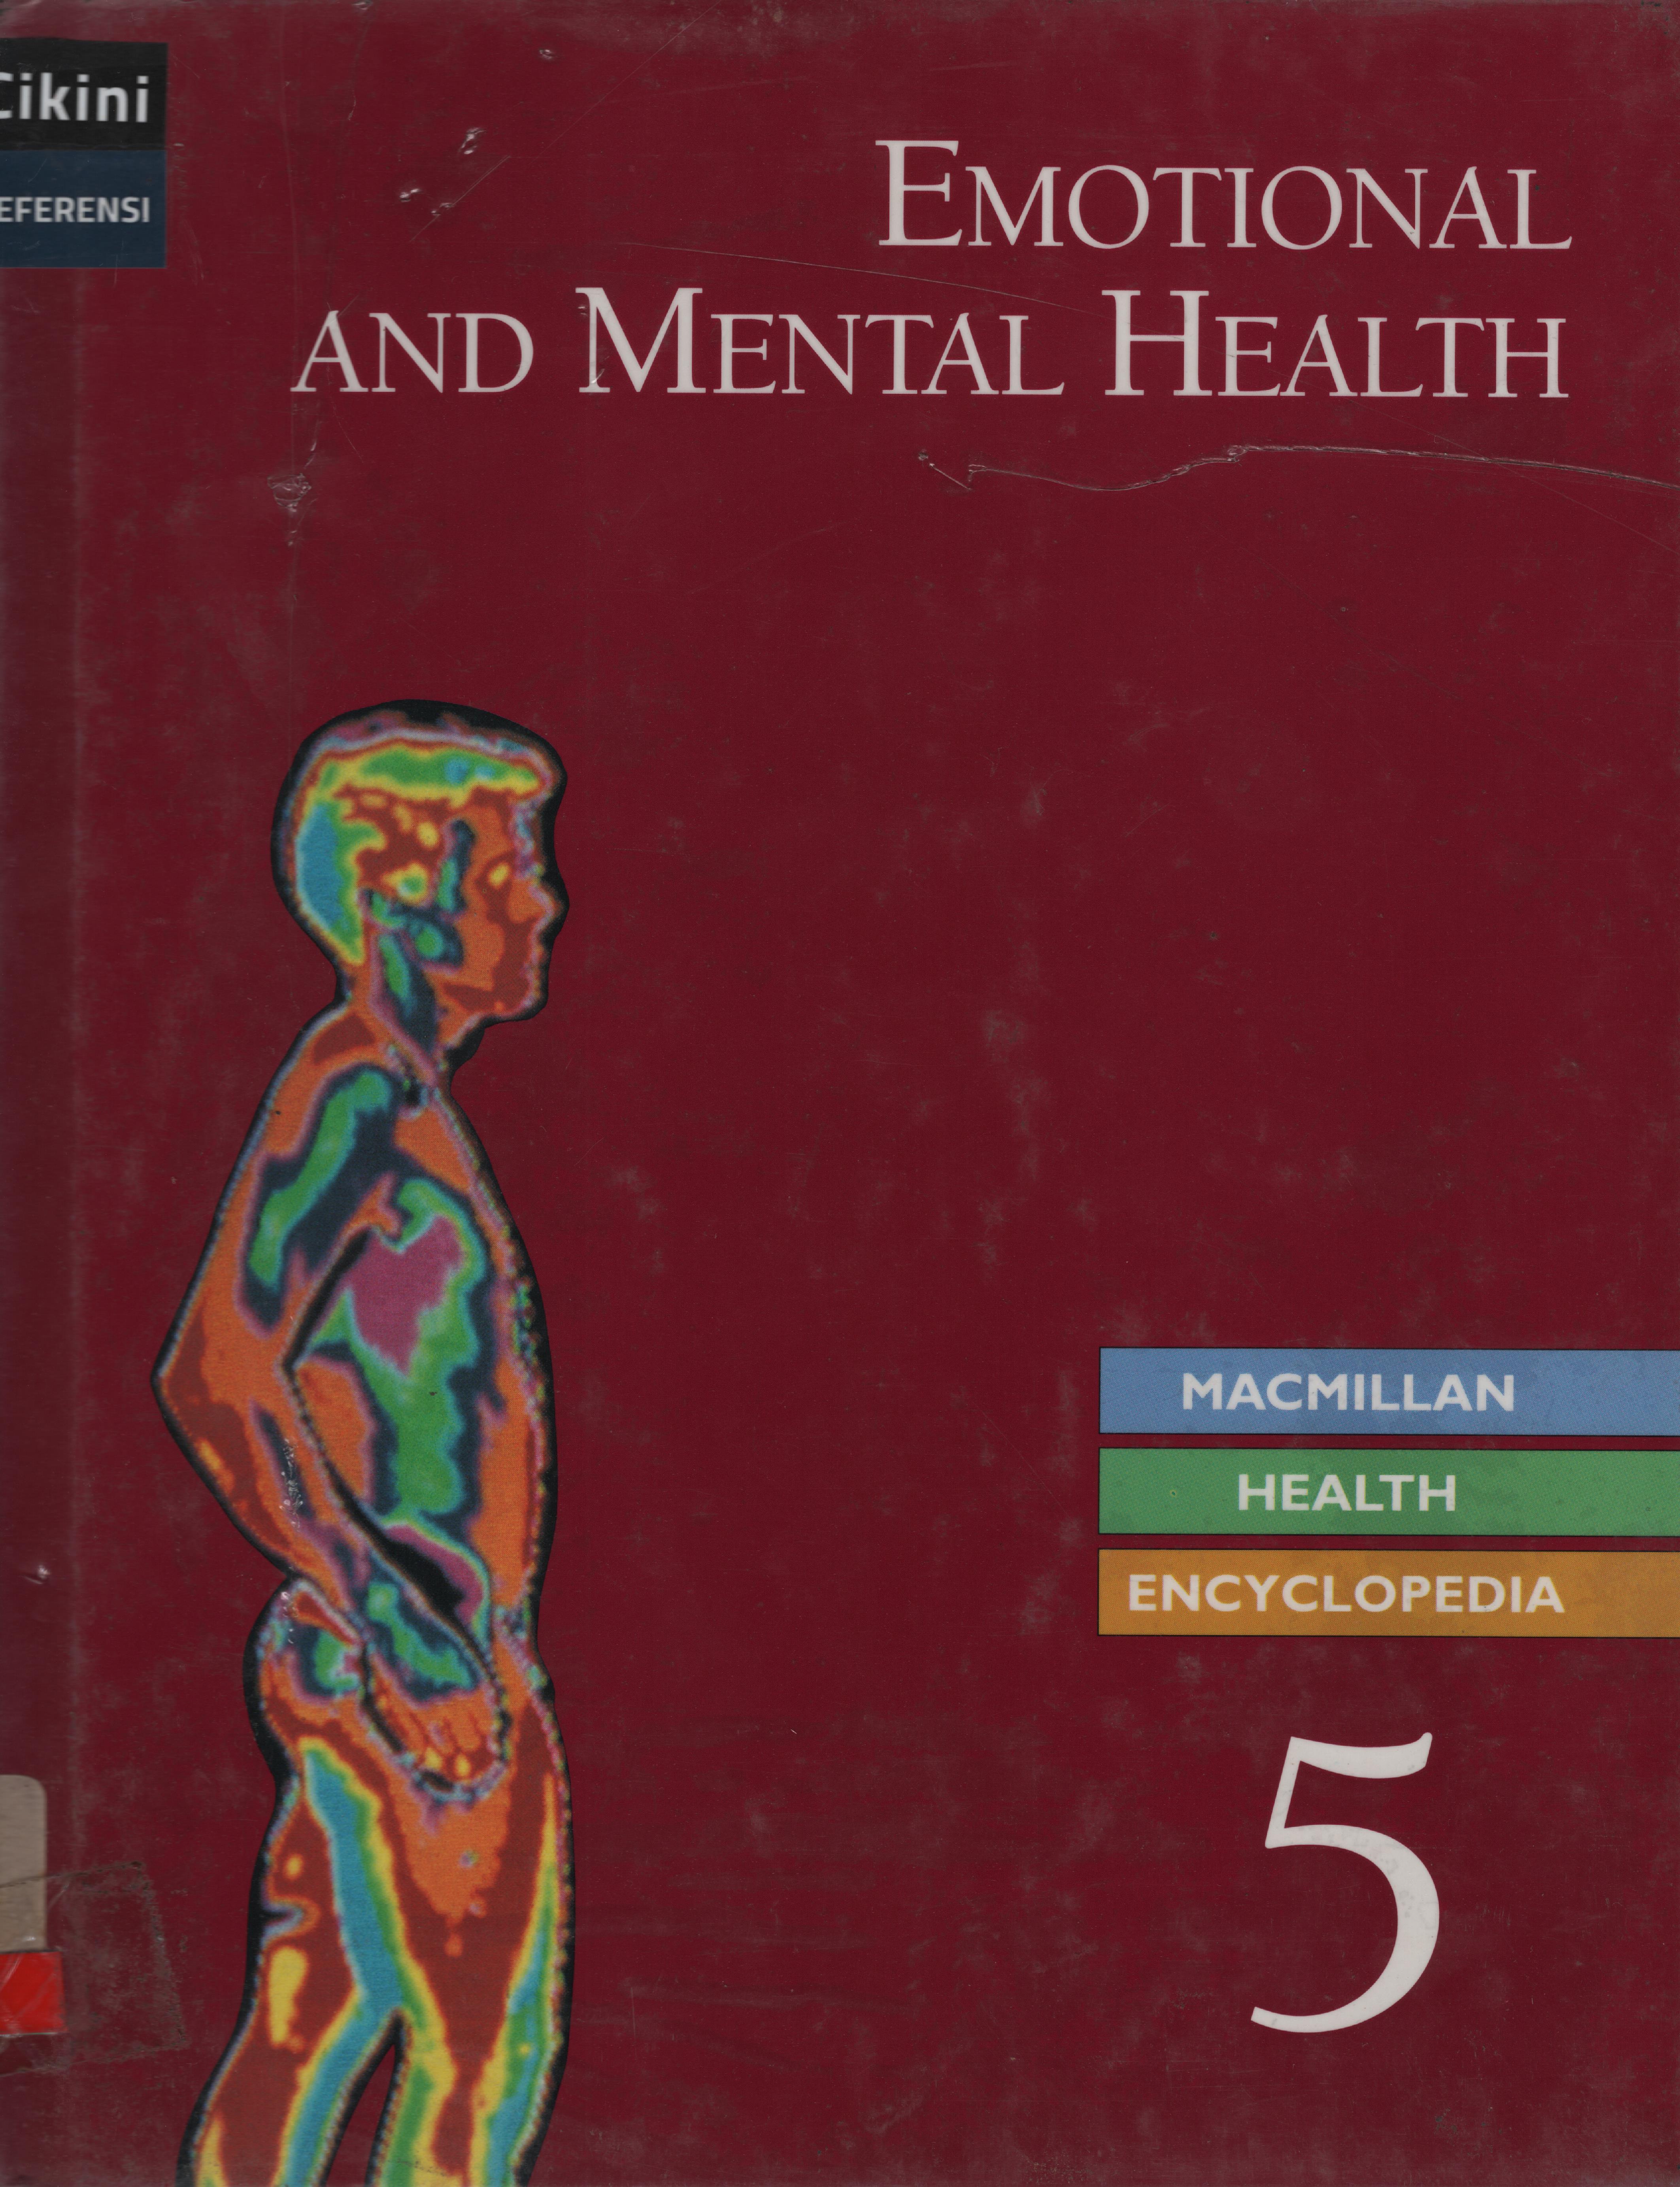 Macmillan health encyclopedia 5 :  emotional and mental health